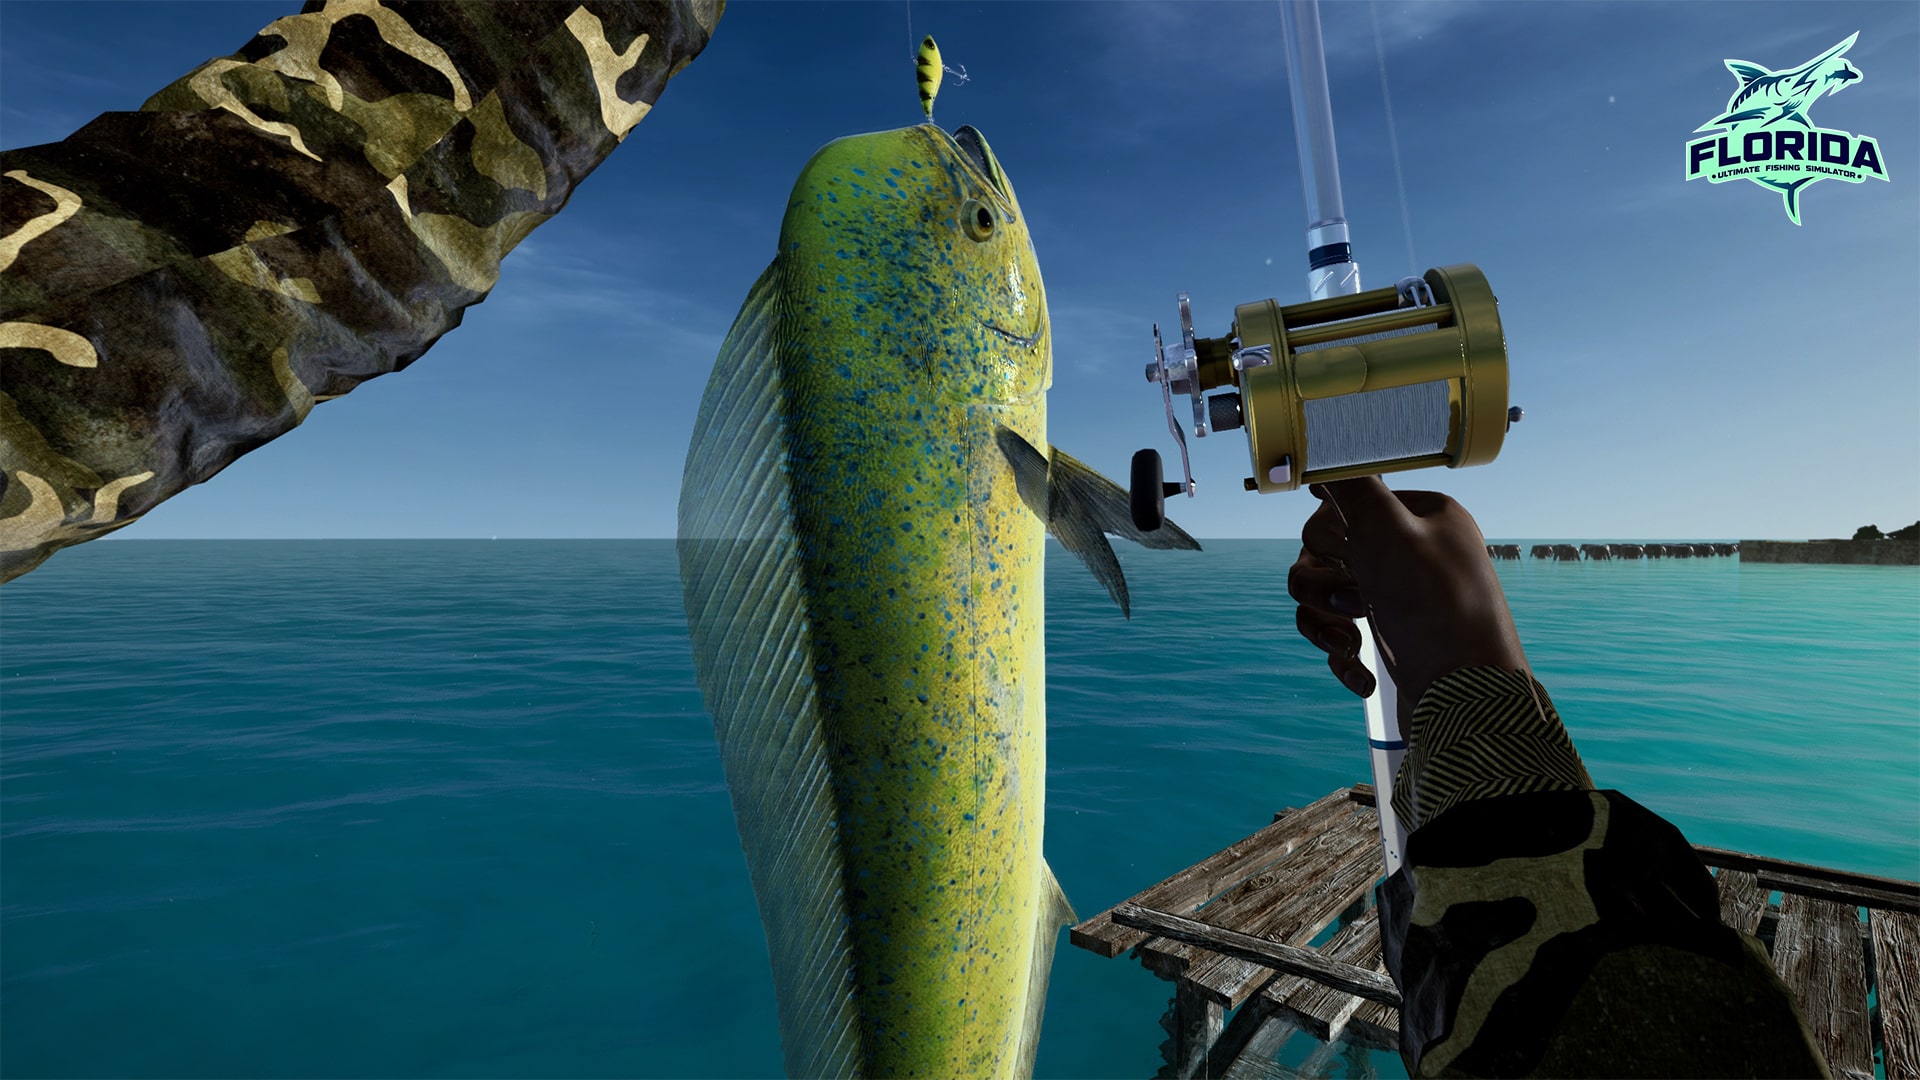 Ultimate Games - 📣 Ultimate Fishing Simulator - XBOX update 1.0